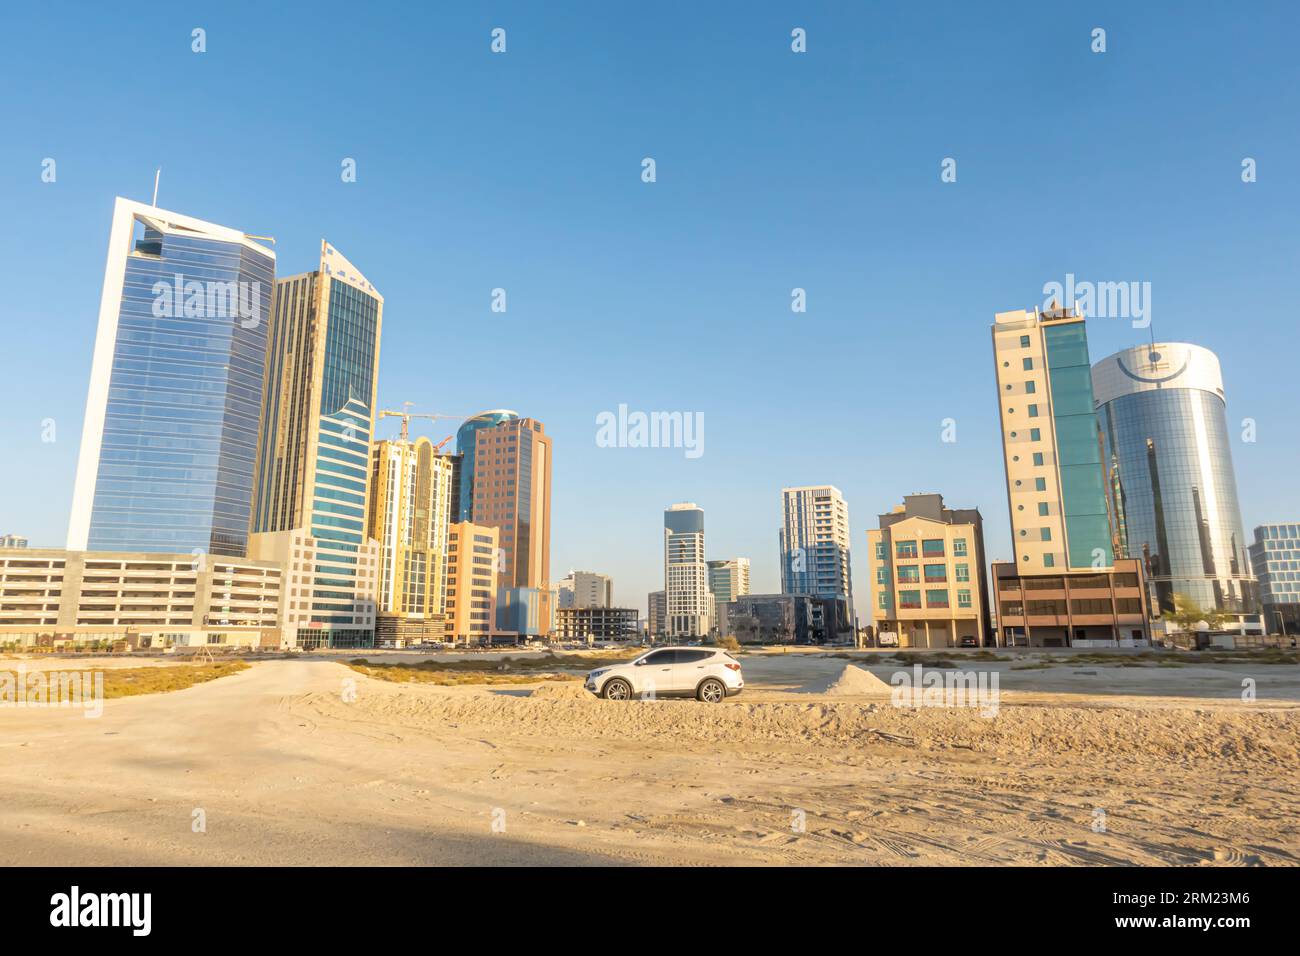 City development Bahrain. Urban development in Bahrain. Constructed residential buildings in Seef Bahrain Stock Photo